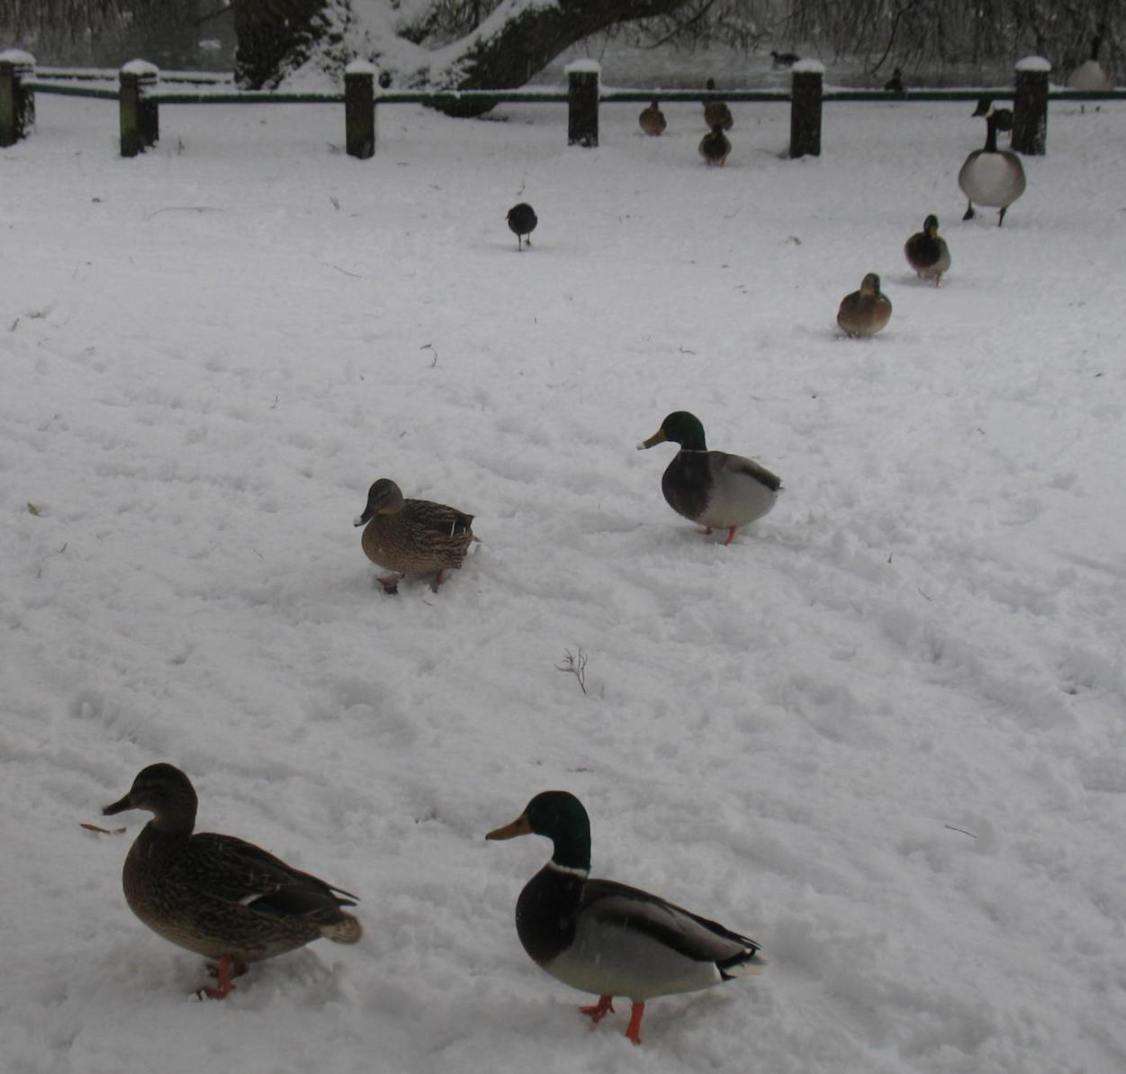 Ducks in snowy Priory Gardens Orpington